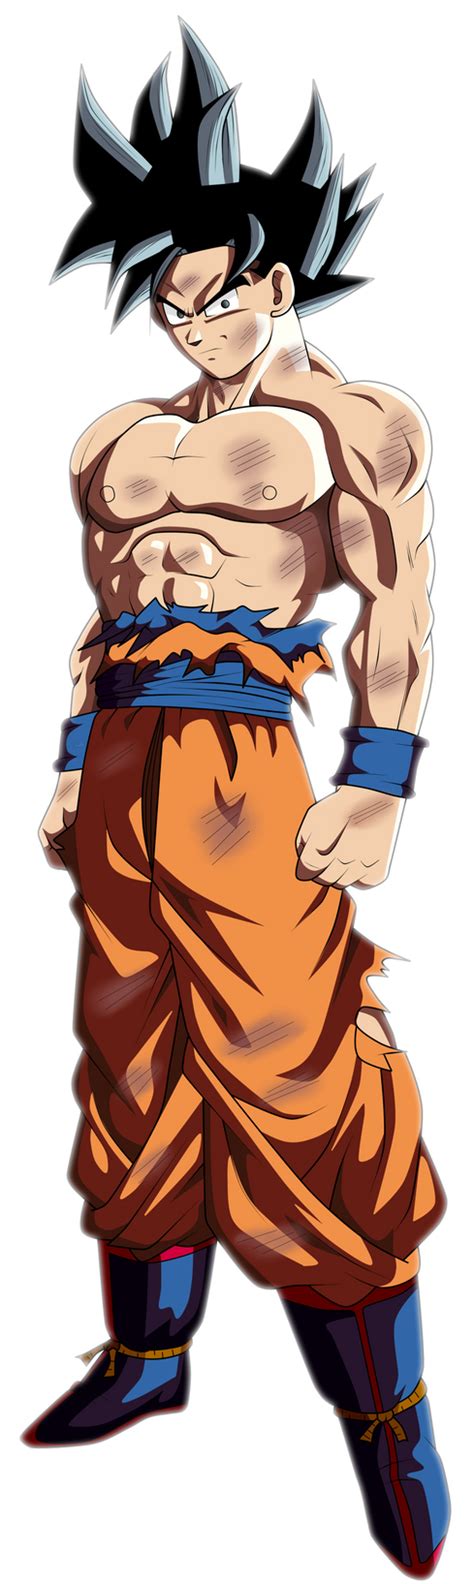 Son Goku Breaking The Limit By Chronofz On Deviantart